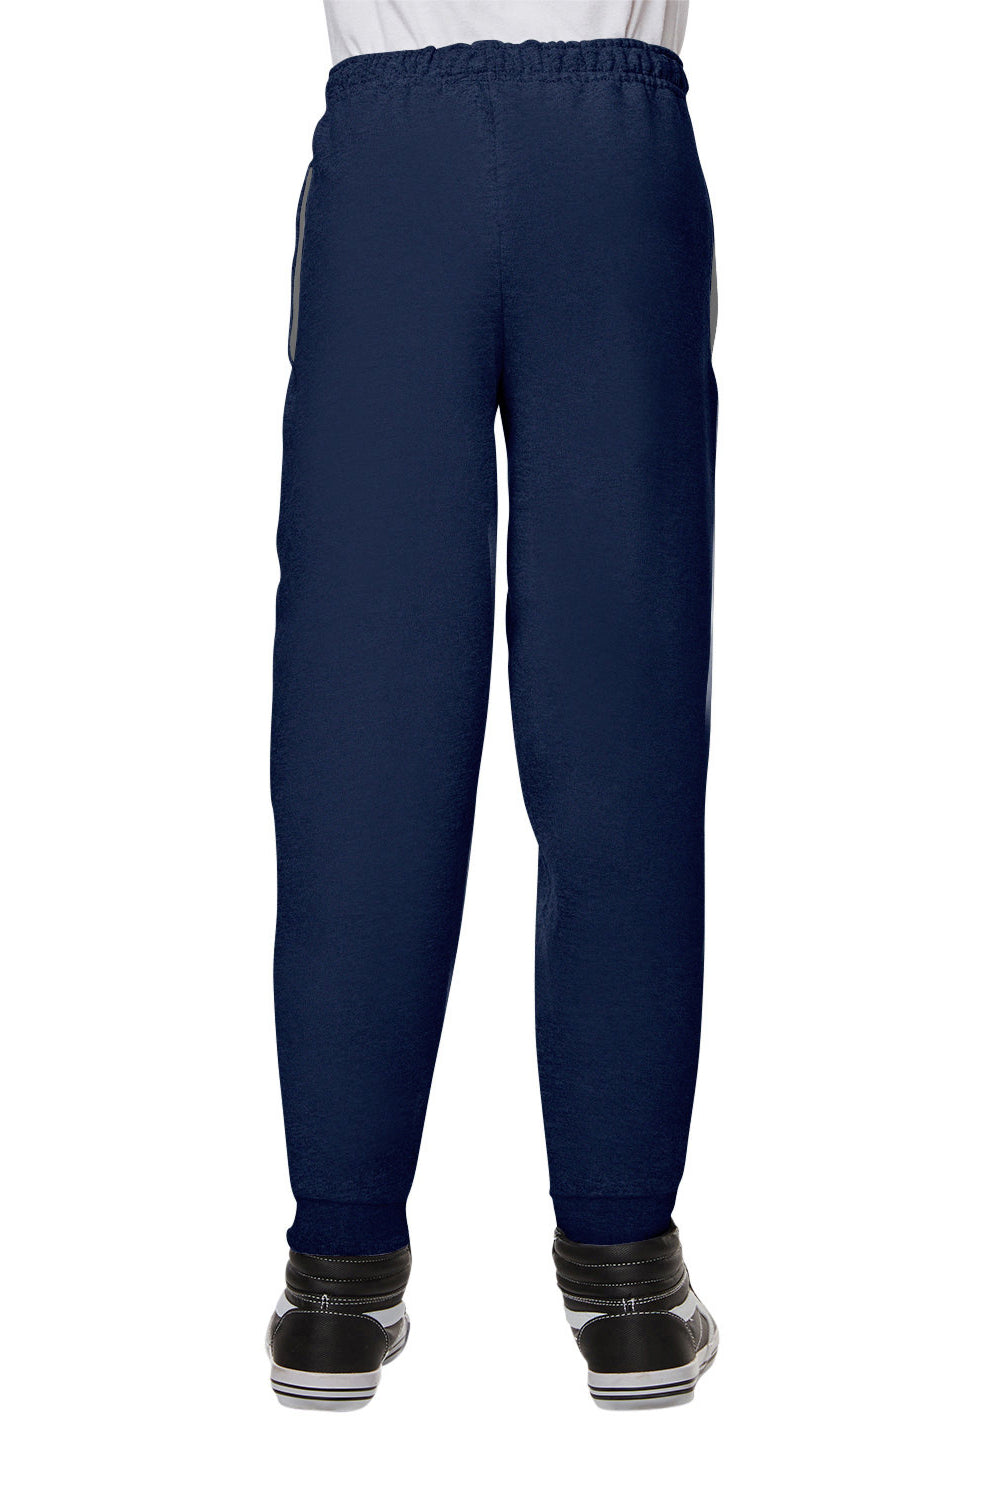 Jerzees 975YR Youth NuBlend Fleece Jogger Sweatpants w/ Pockets Navy Blue Back